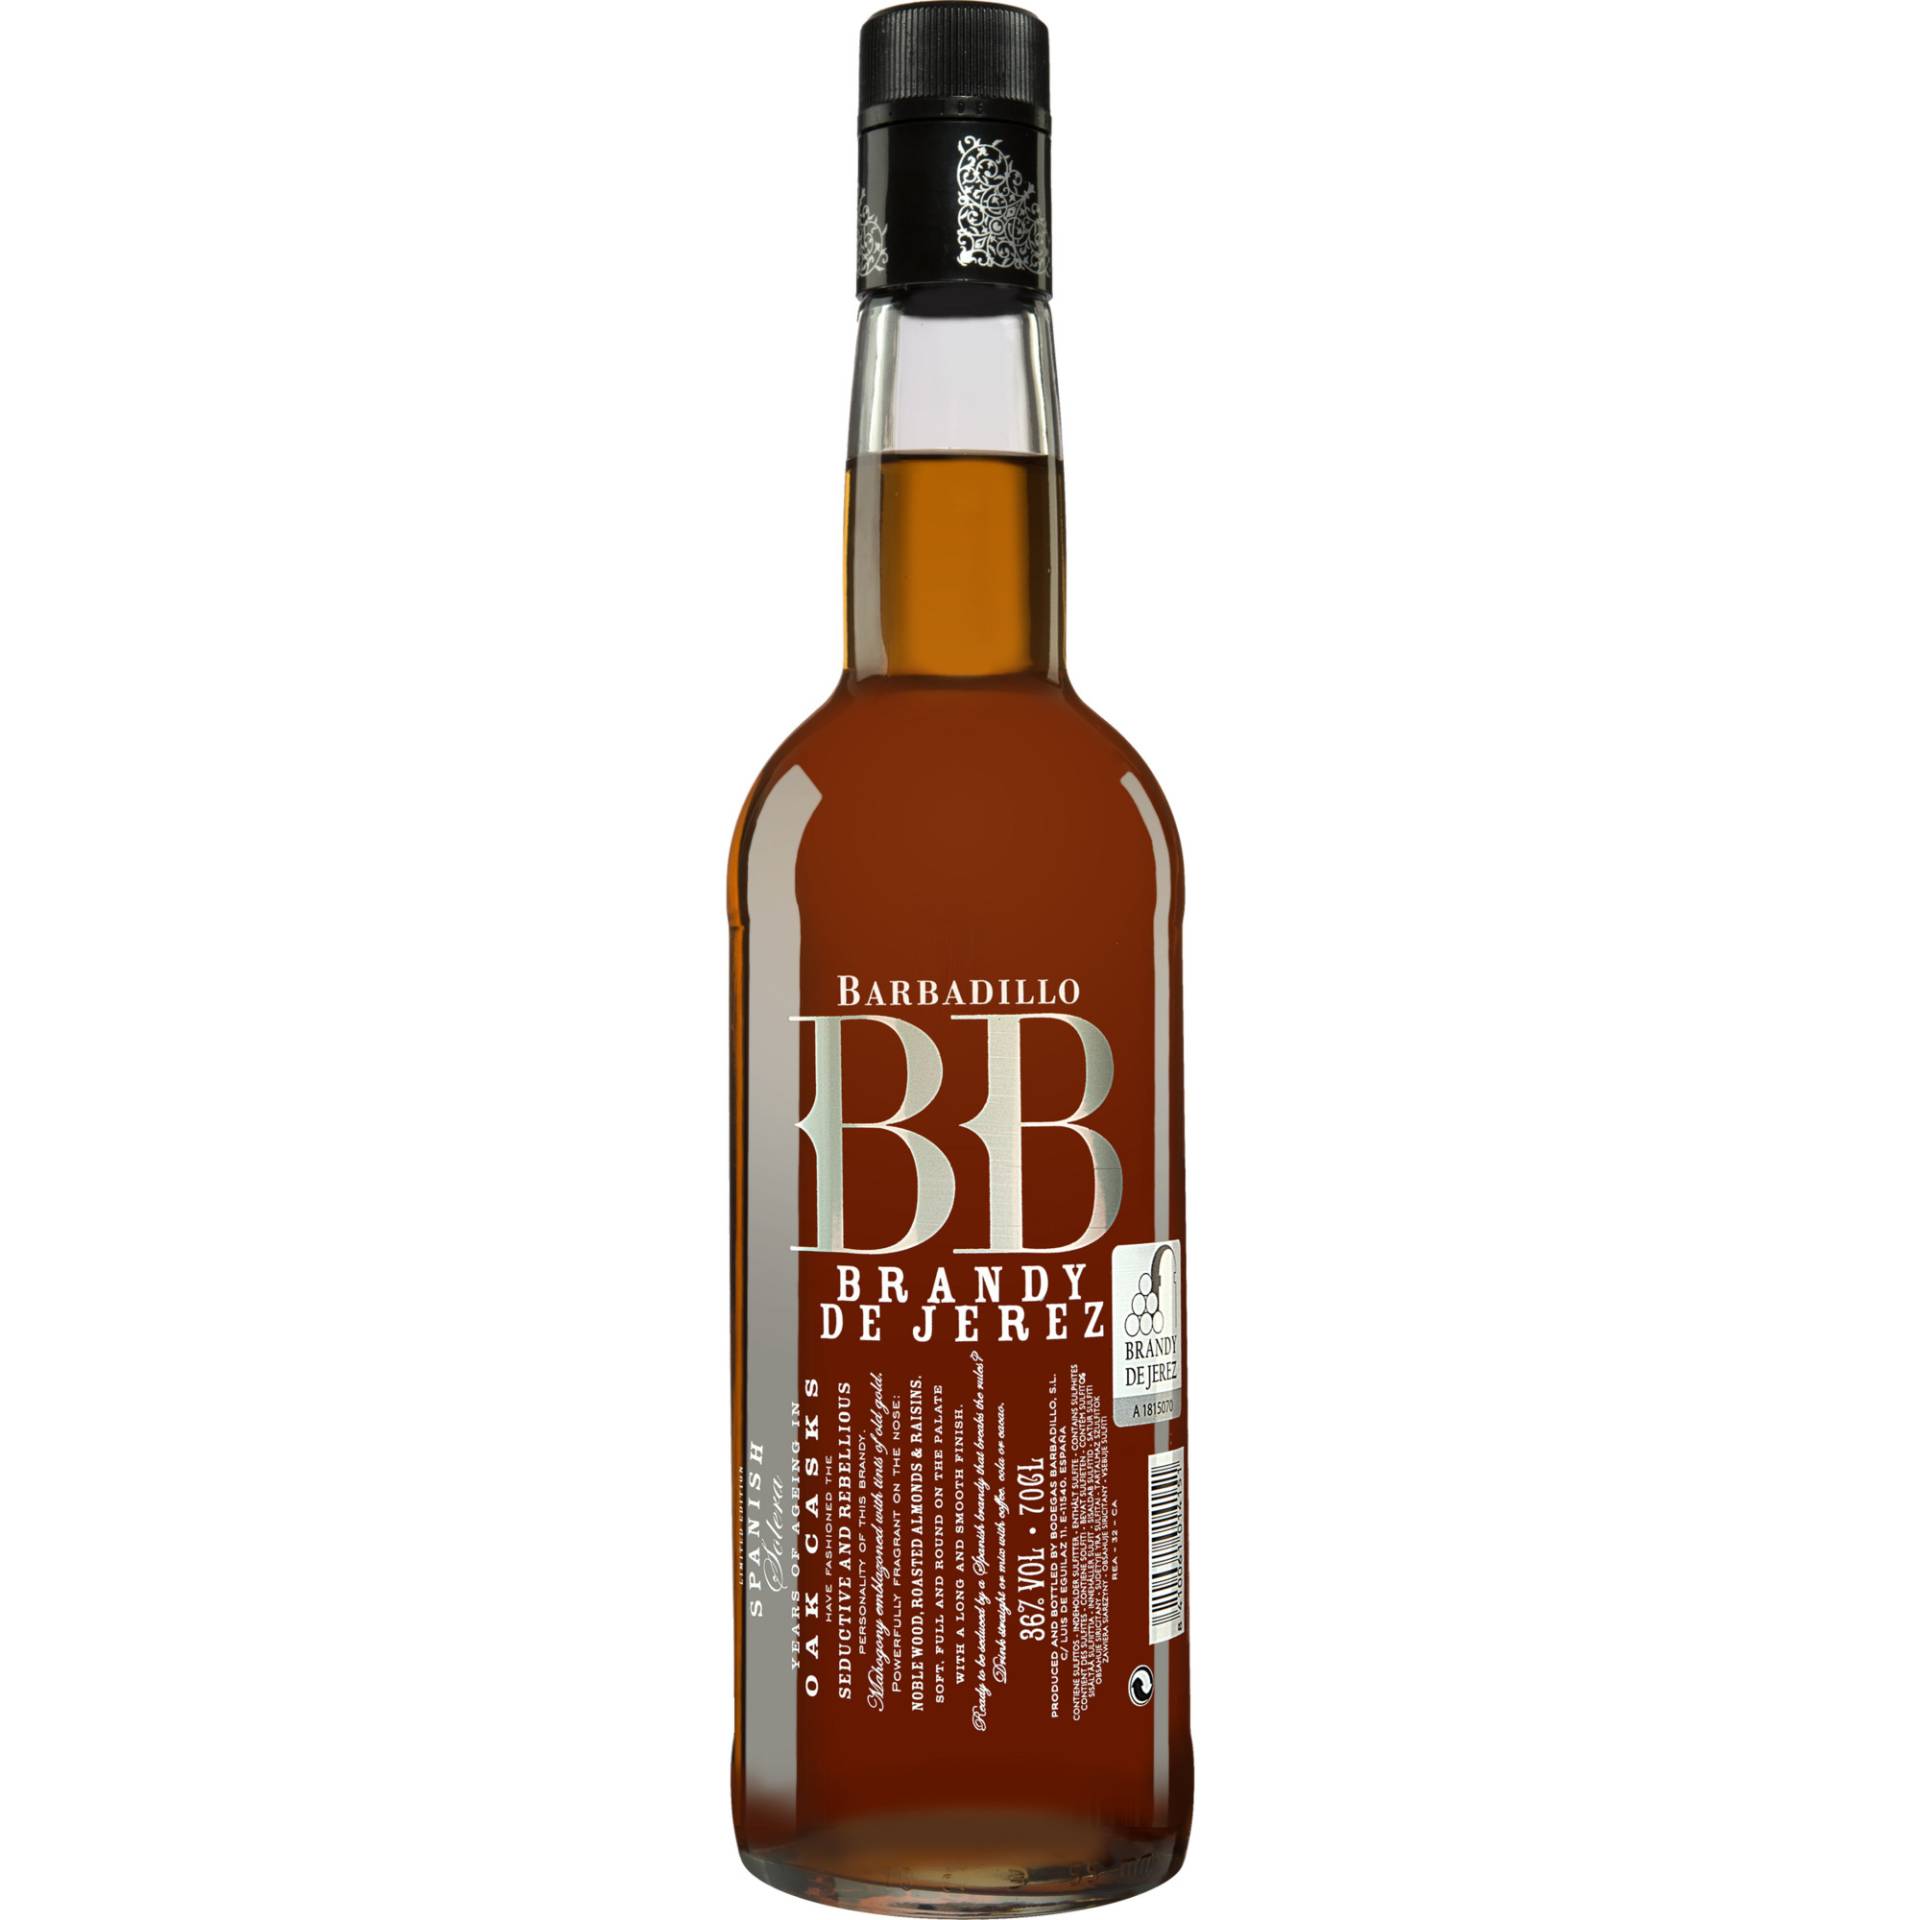 Brandy Barbadillo B & B - 0,7 L.  0.7L 36% Vol. Brandy aus Spanien von Barbadillo